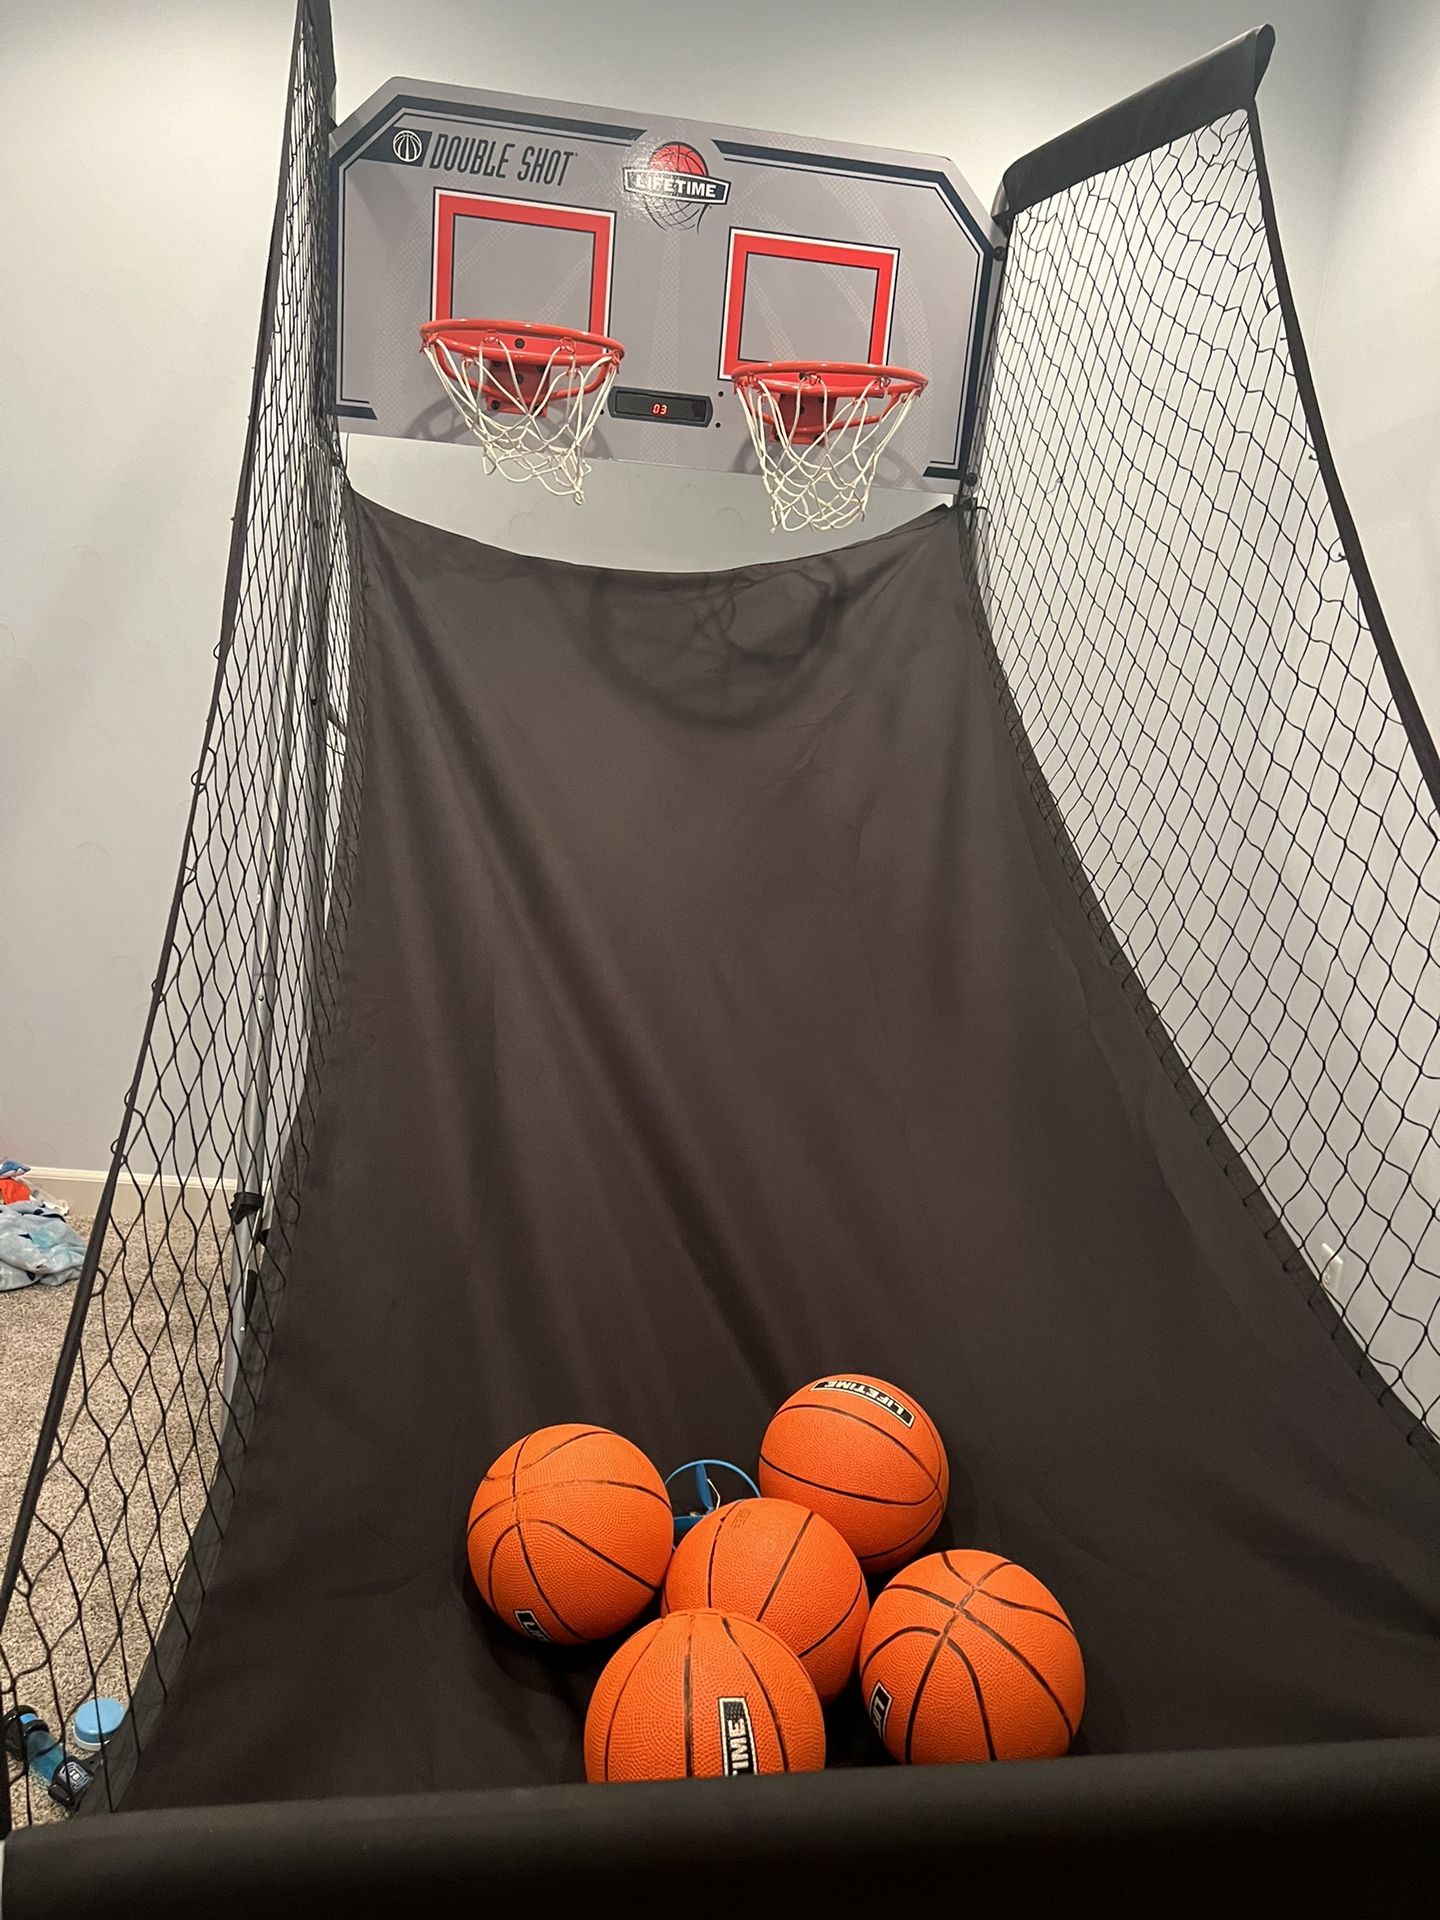 Double shoot life time basket ball arcade